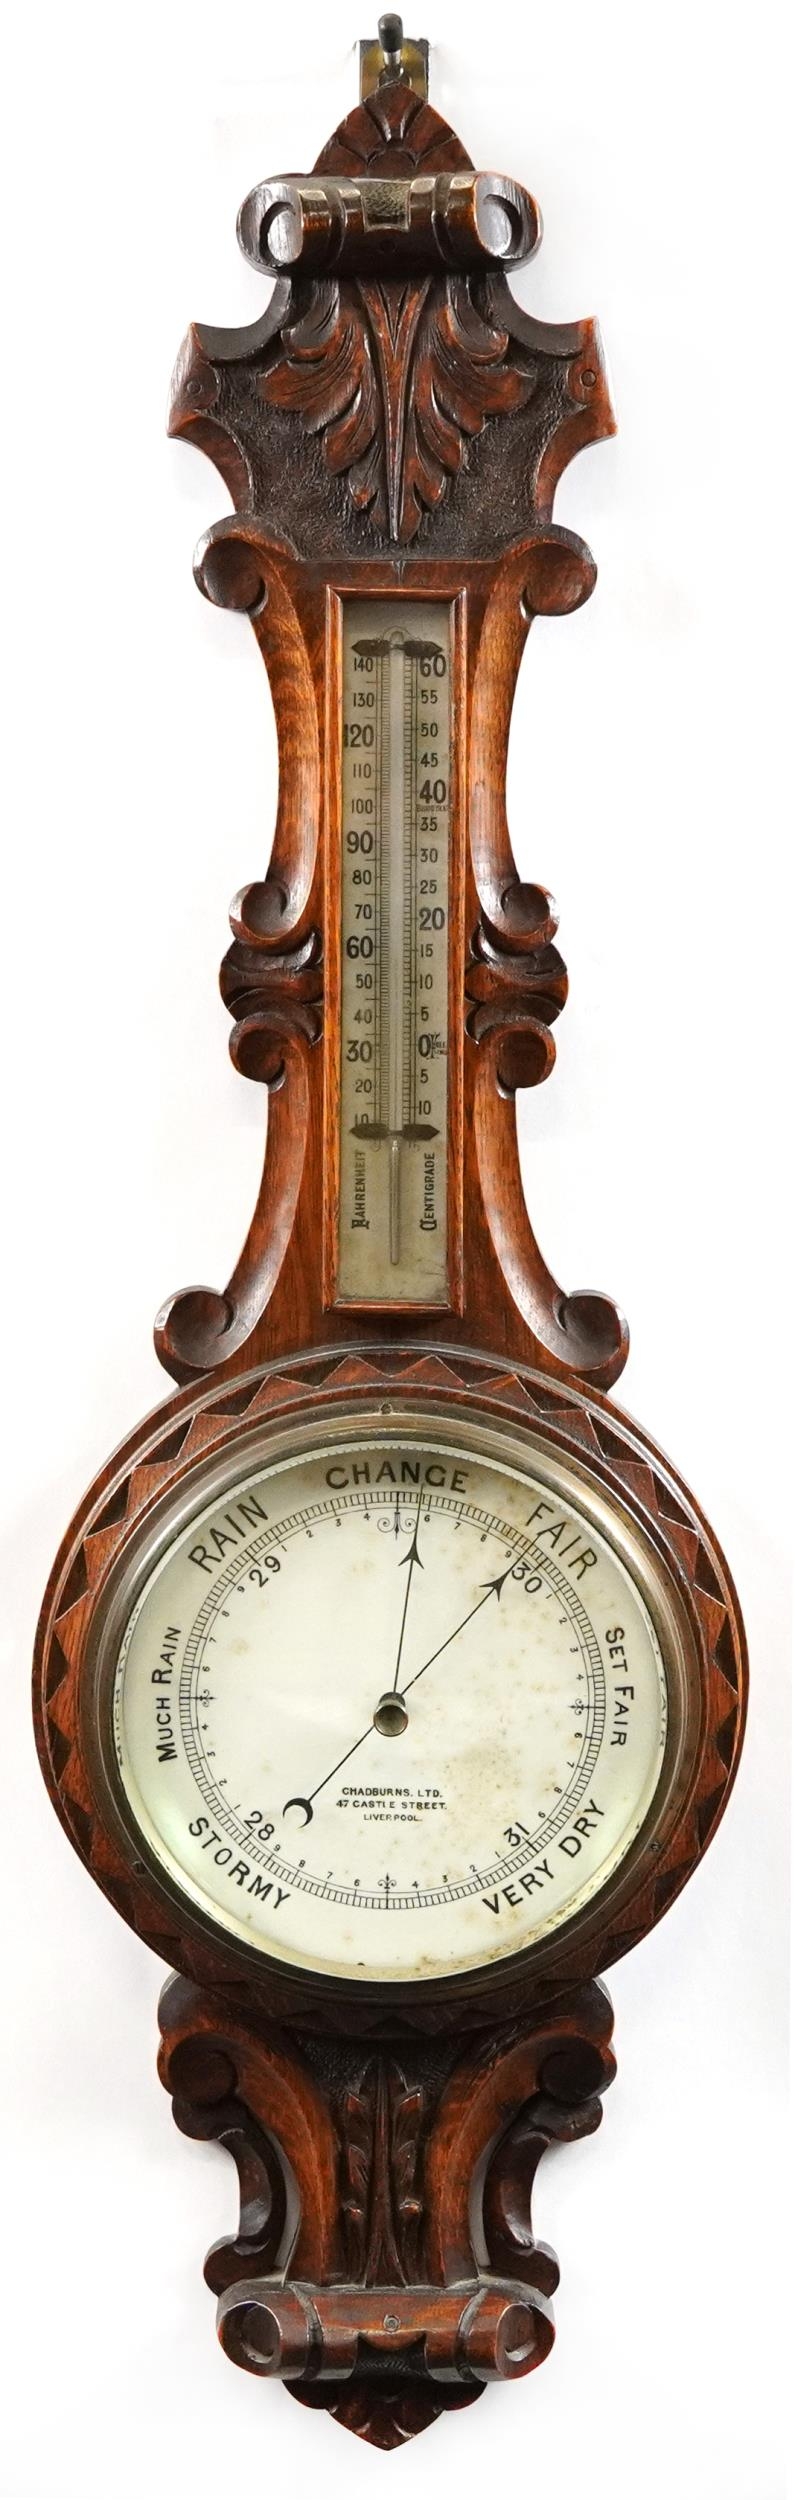 Carved oak barometer, the dial inscribed Chadburns Ltd, 47 Castle Street Liverpool, 85cm high